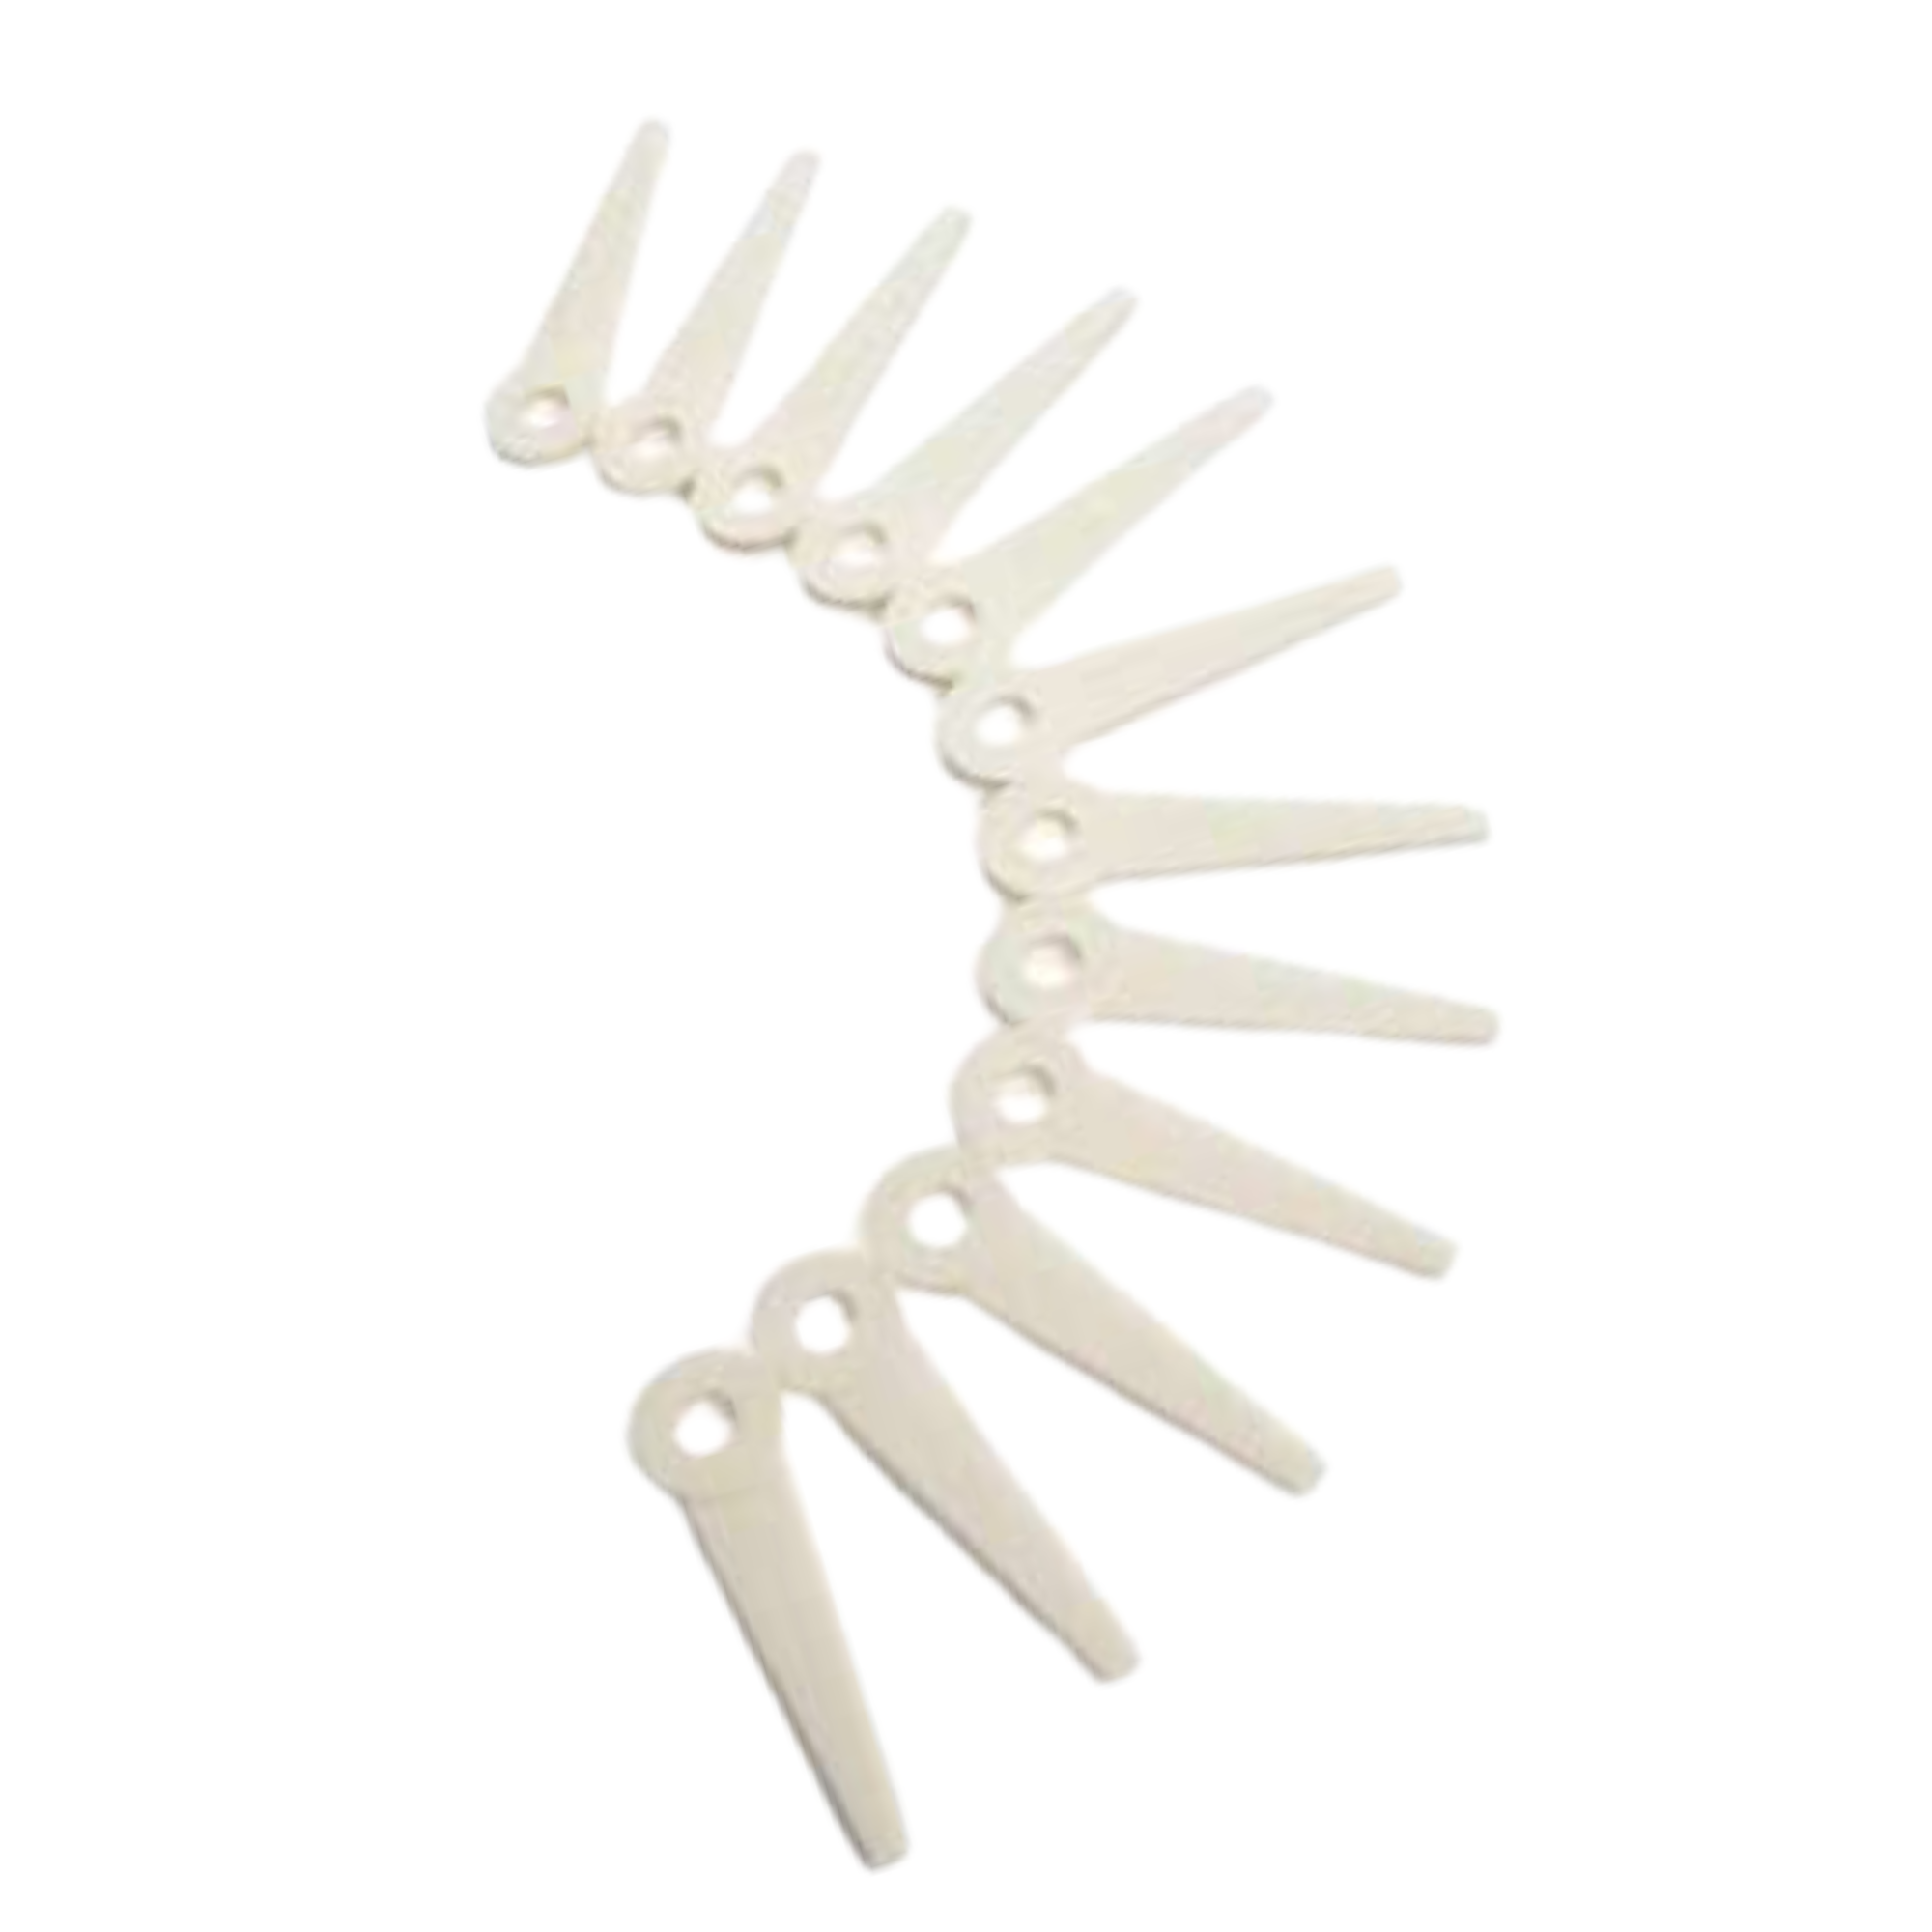 Stihl Polycut Blades (12 per pkg) |White | 4111 007 1001